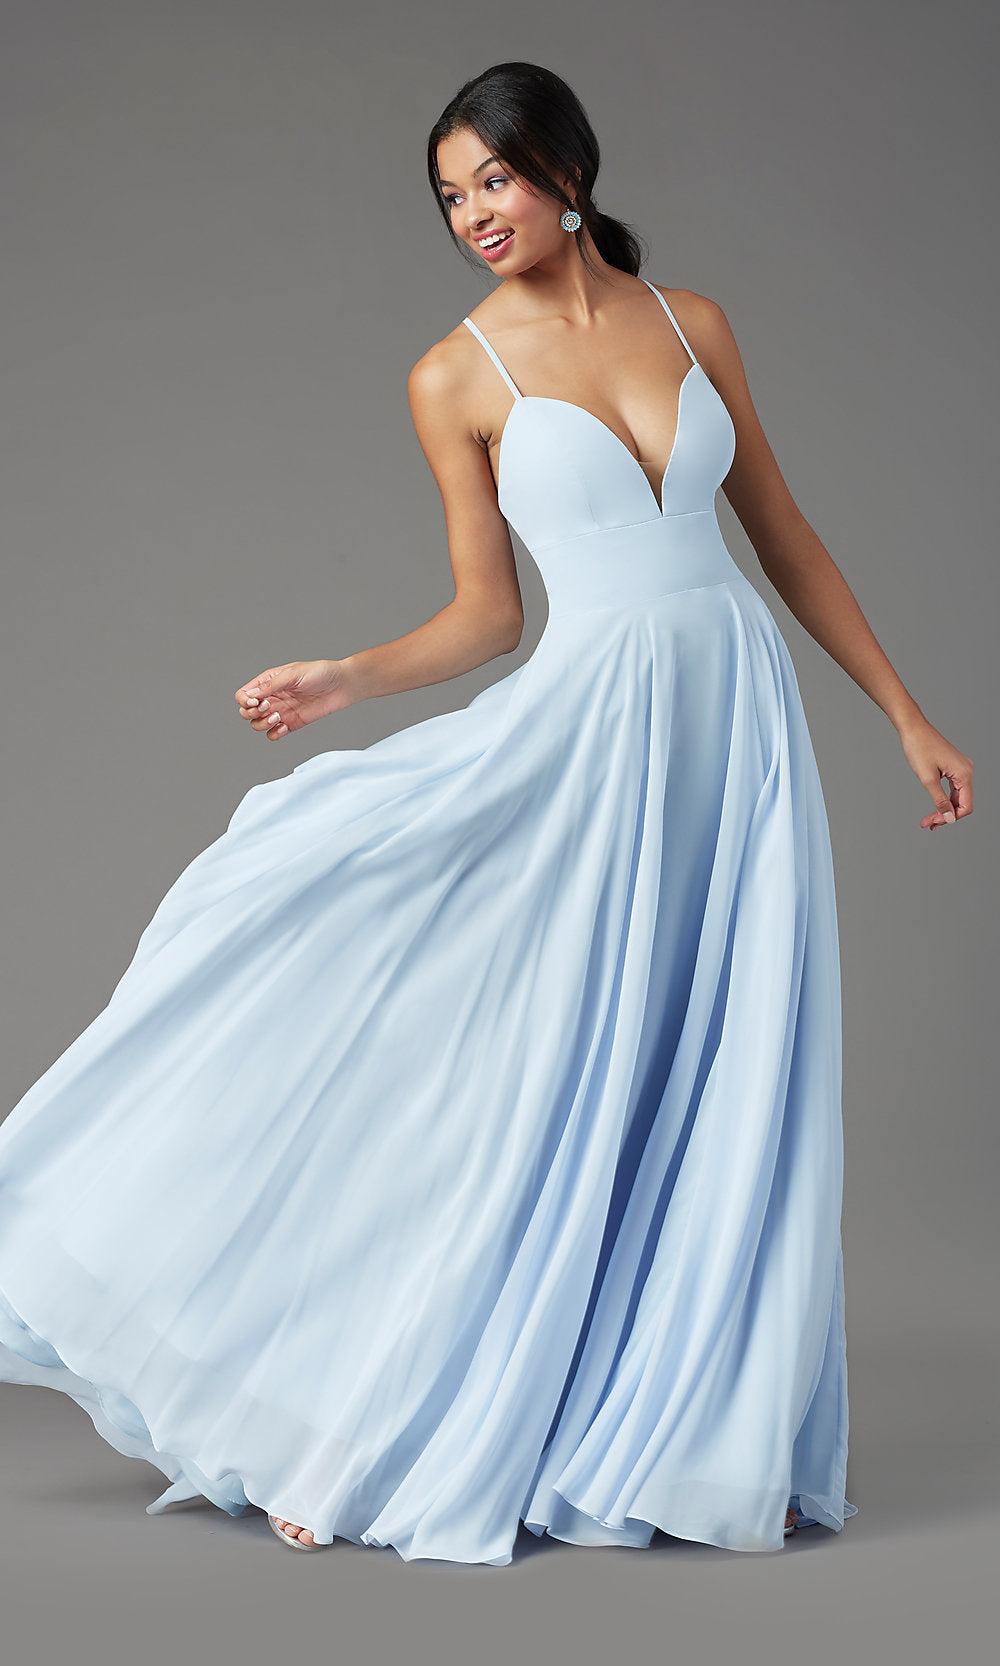 A-Line Long Chiffon Formal Prom Dress by PromGirl